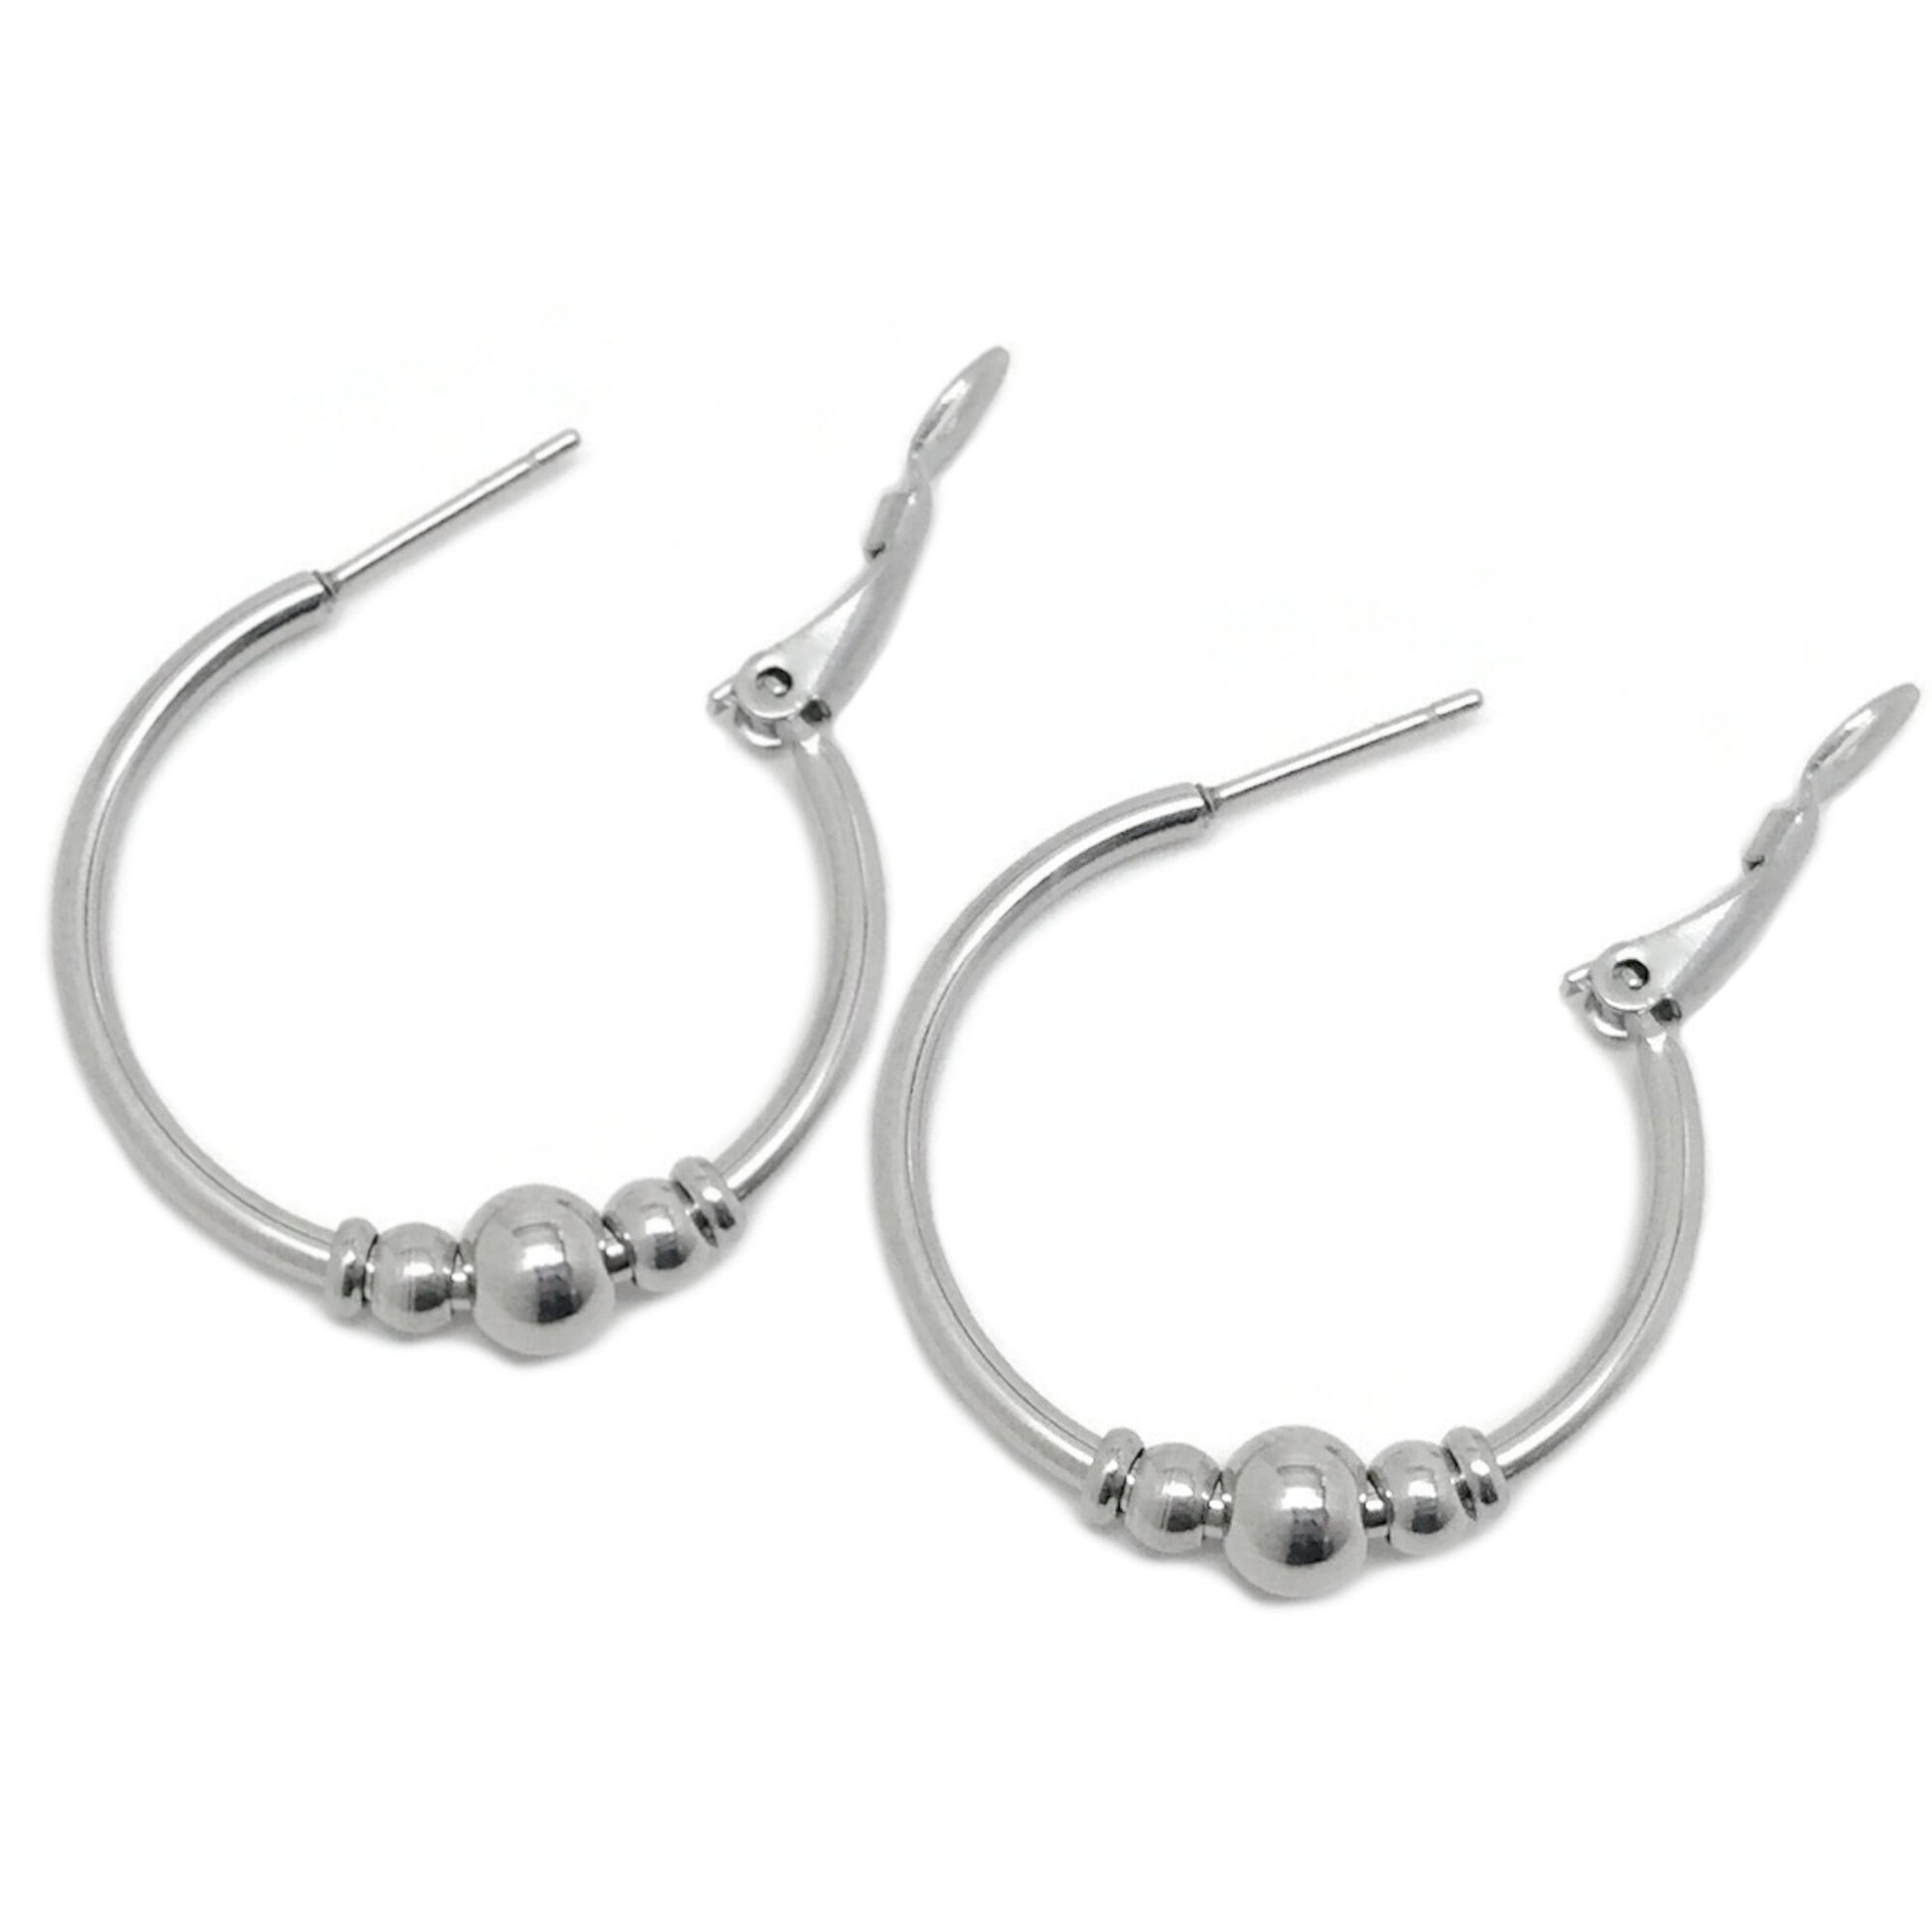 Beaded Hoop Earrings Medium, Stainless Steel Jewelry for Women, Silver Graduated Bead Earrings, Gift for Girlfriend